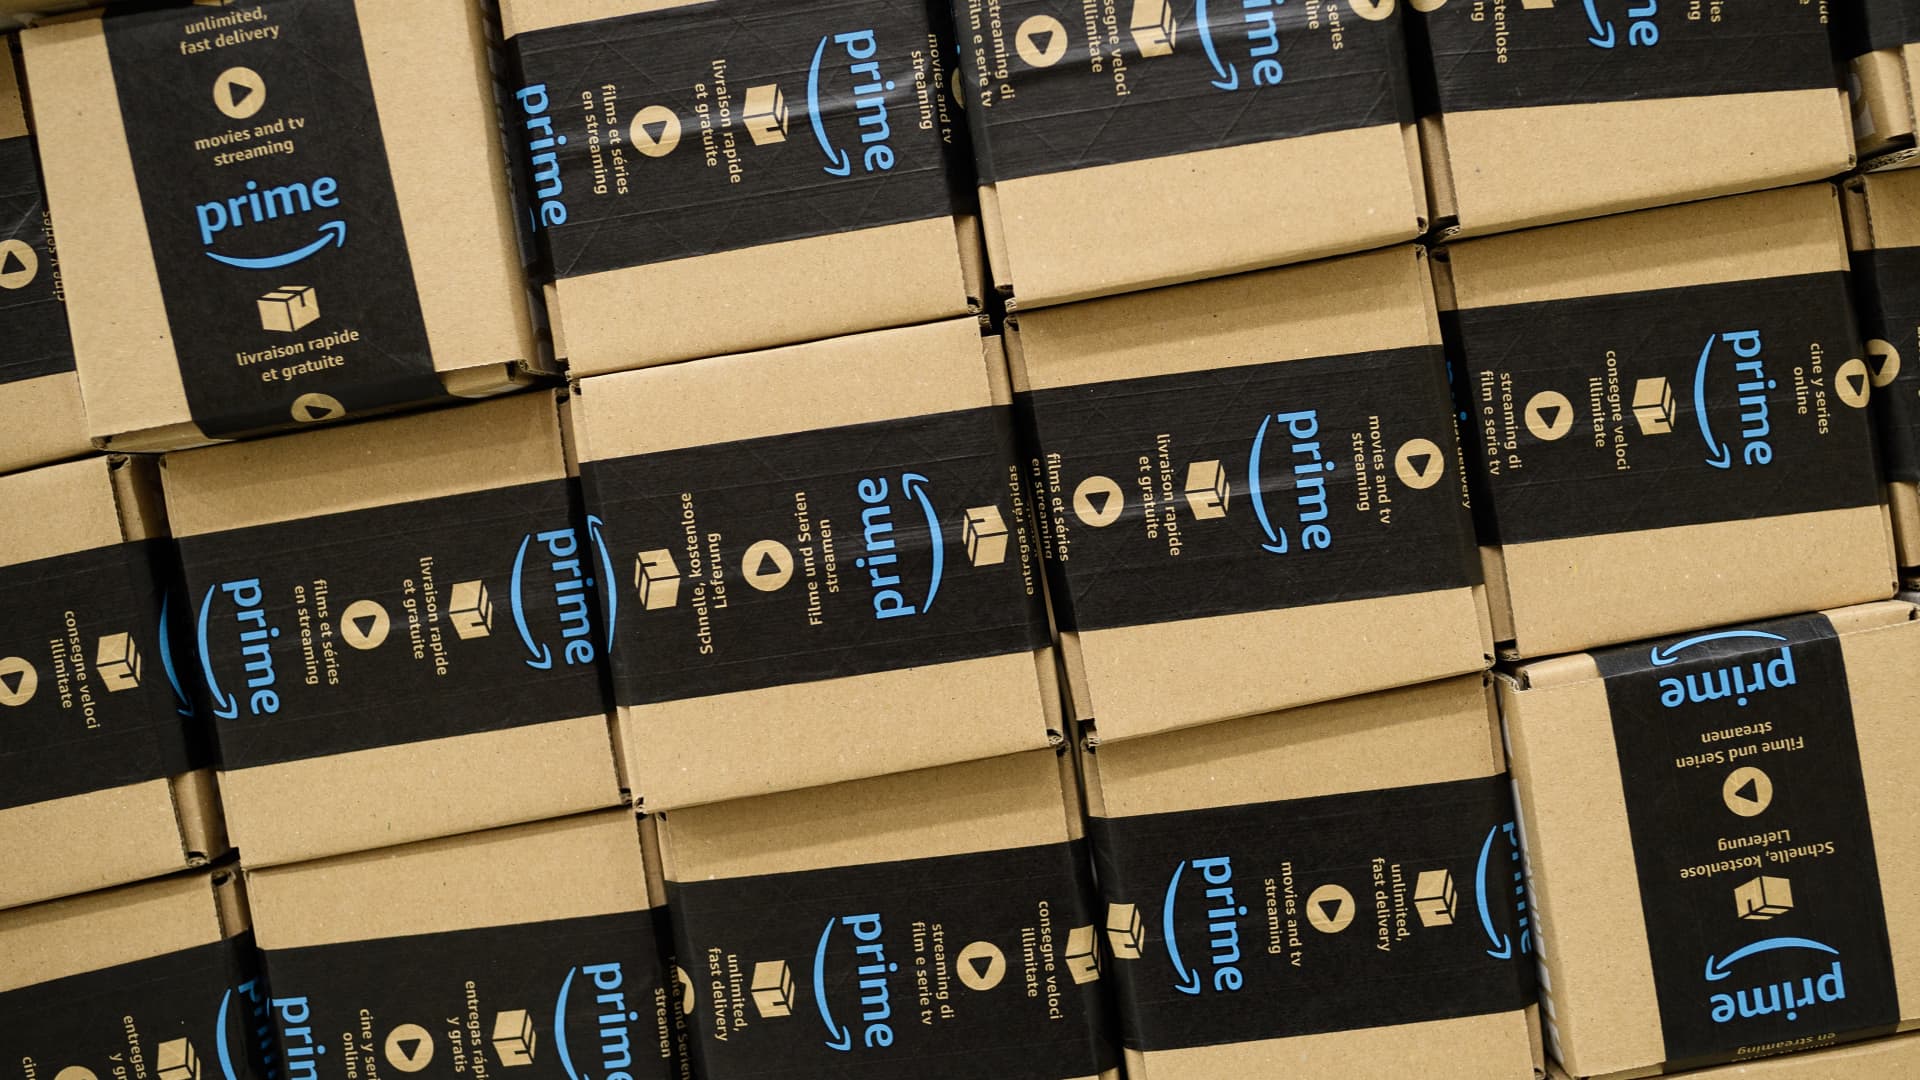 Amazon meningkatkan persaingan antara FedEx dan UPS dengan memperluas Prime ke pihak ketiga